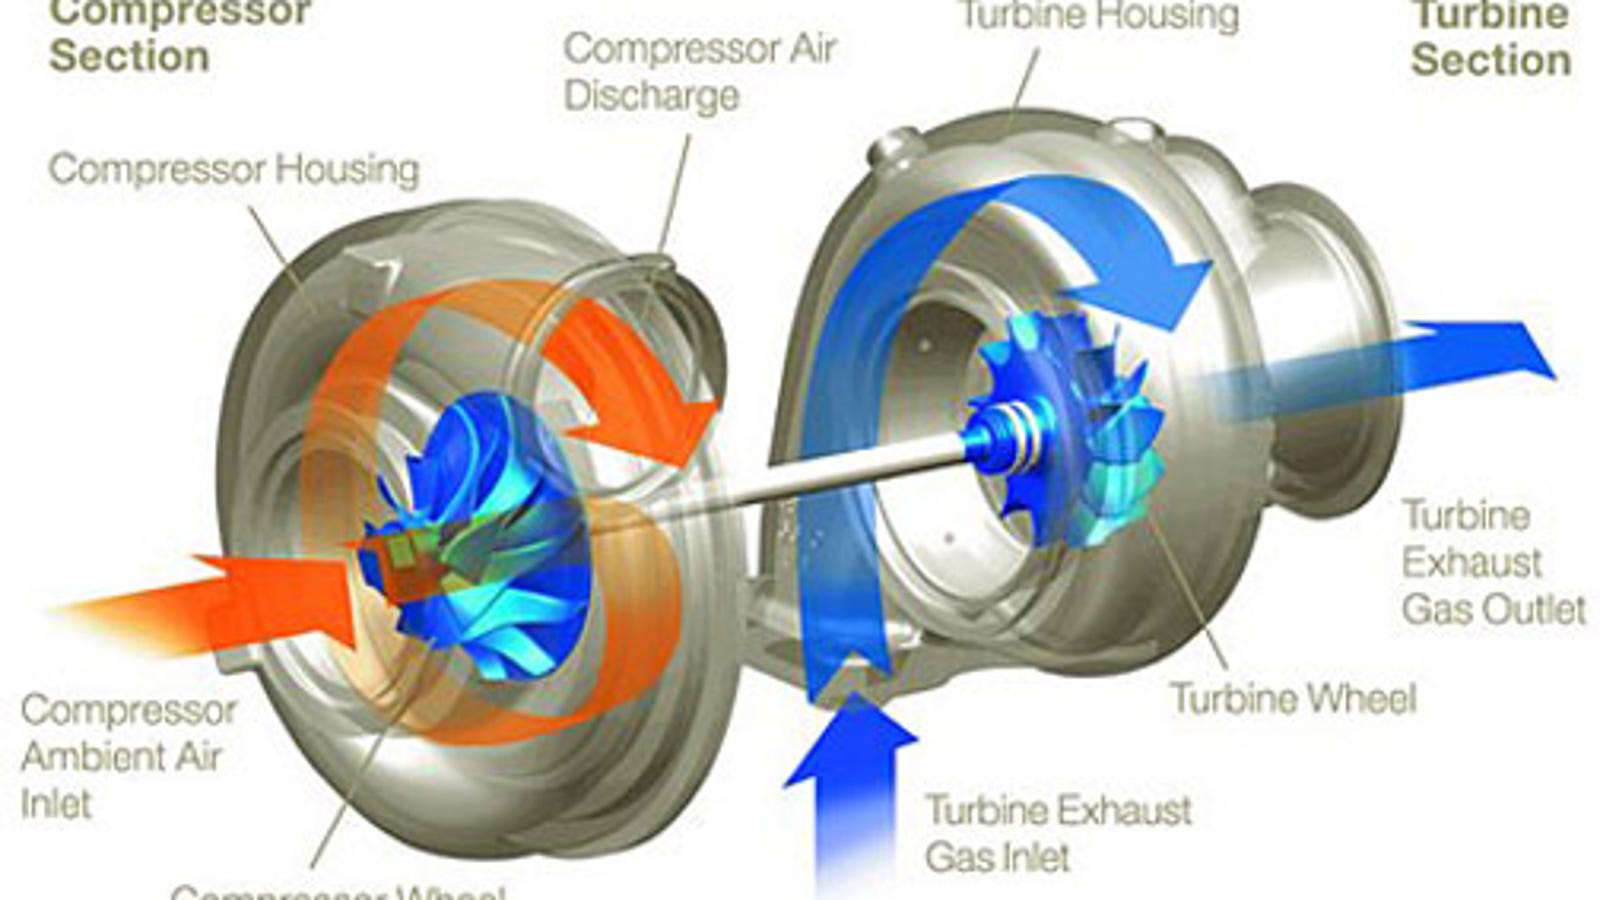 How Does Turbocharging Work?